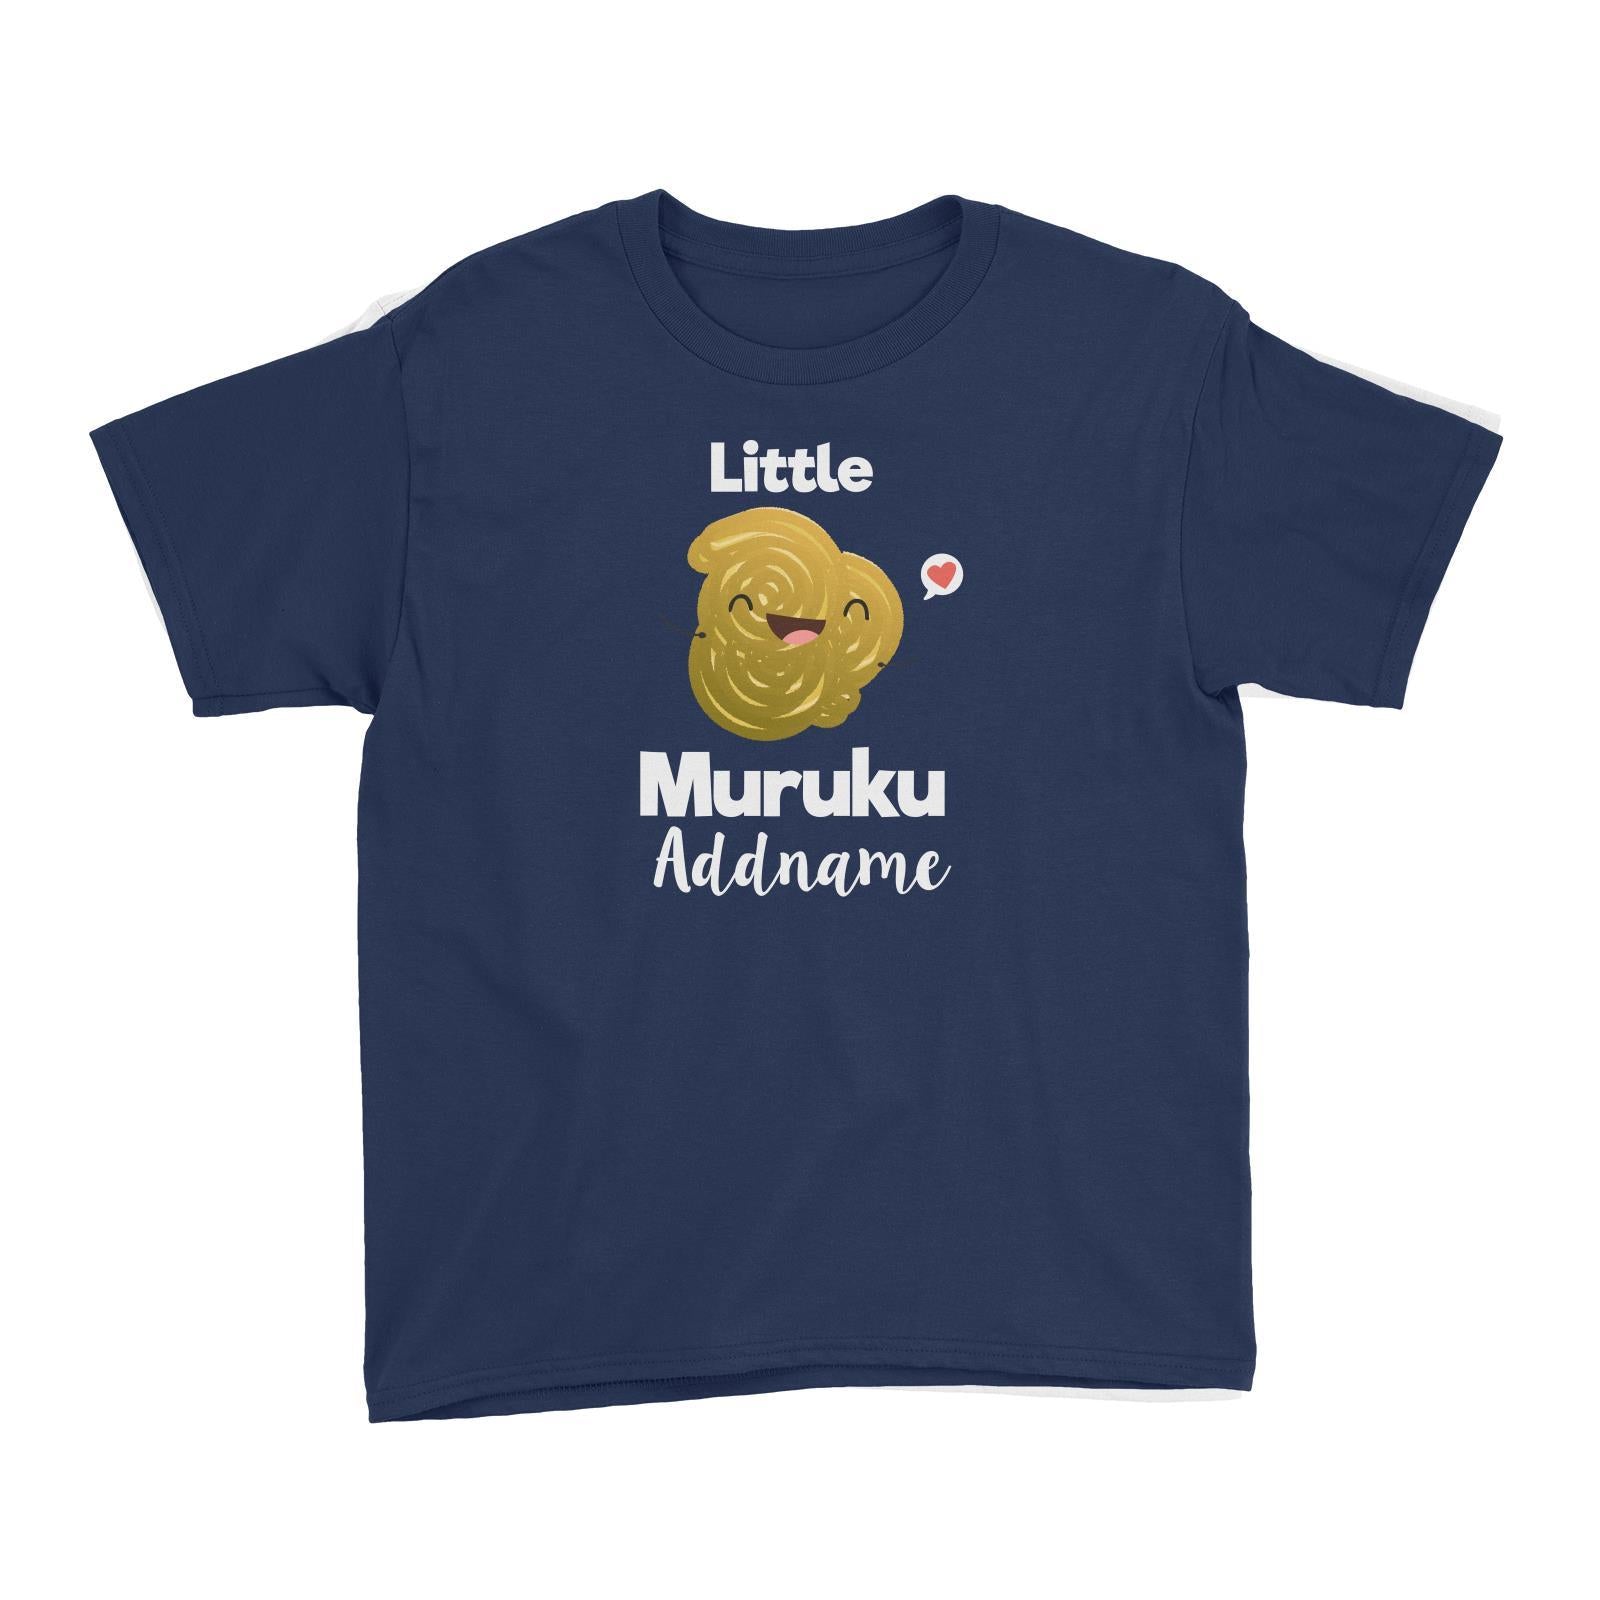 Little Muruku Addname Kid's T-Shirt